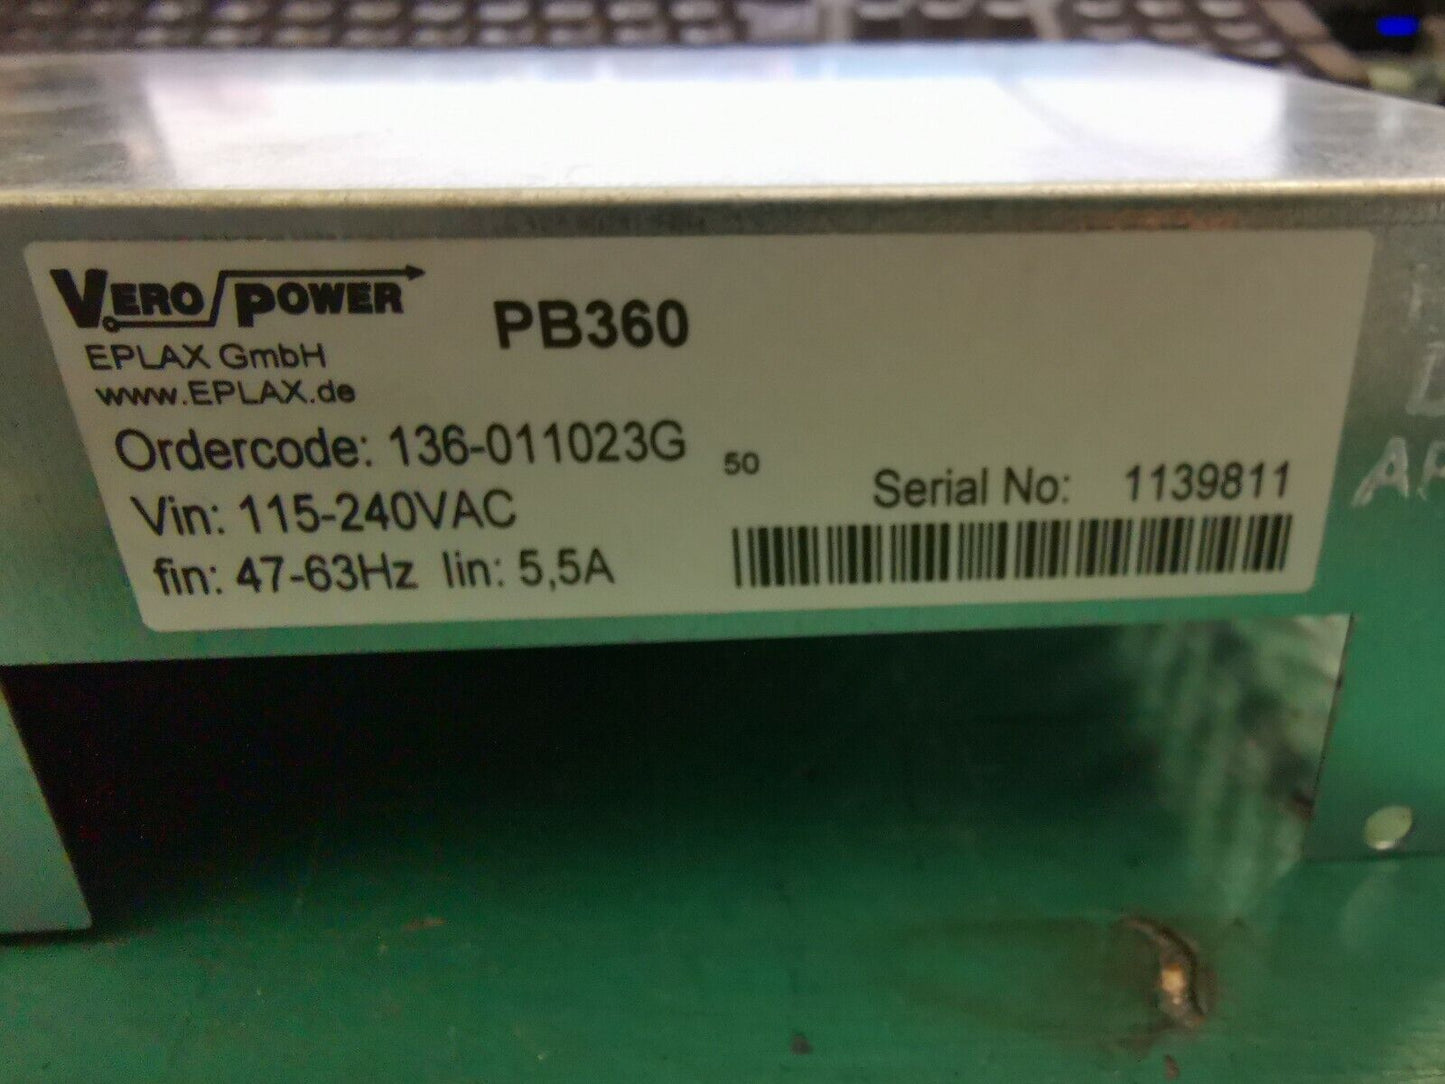 136-011023G  Power Supply PB360  Vero Power  4 Units Missing Main Heatsink